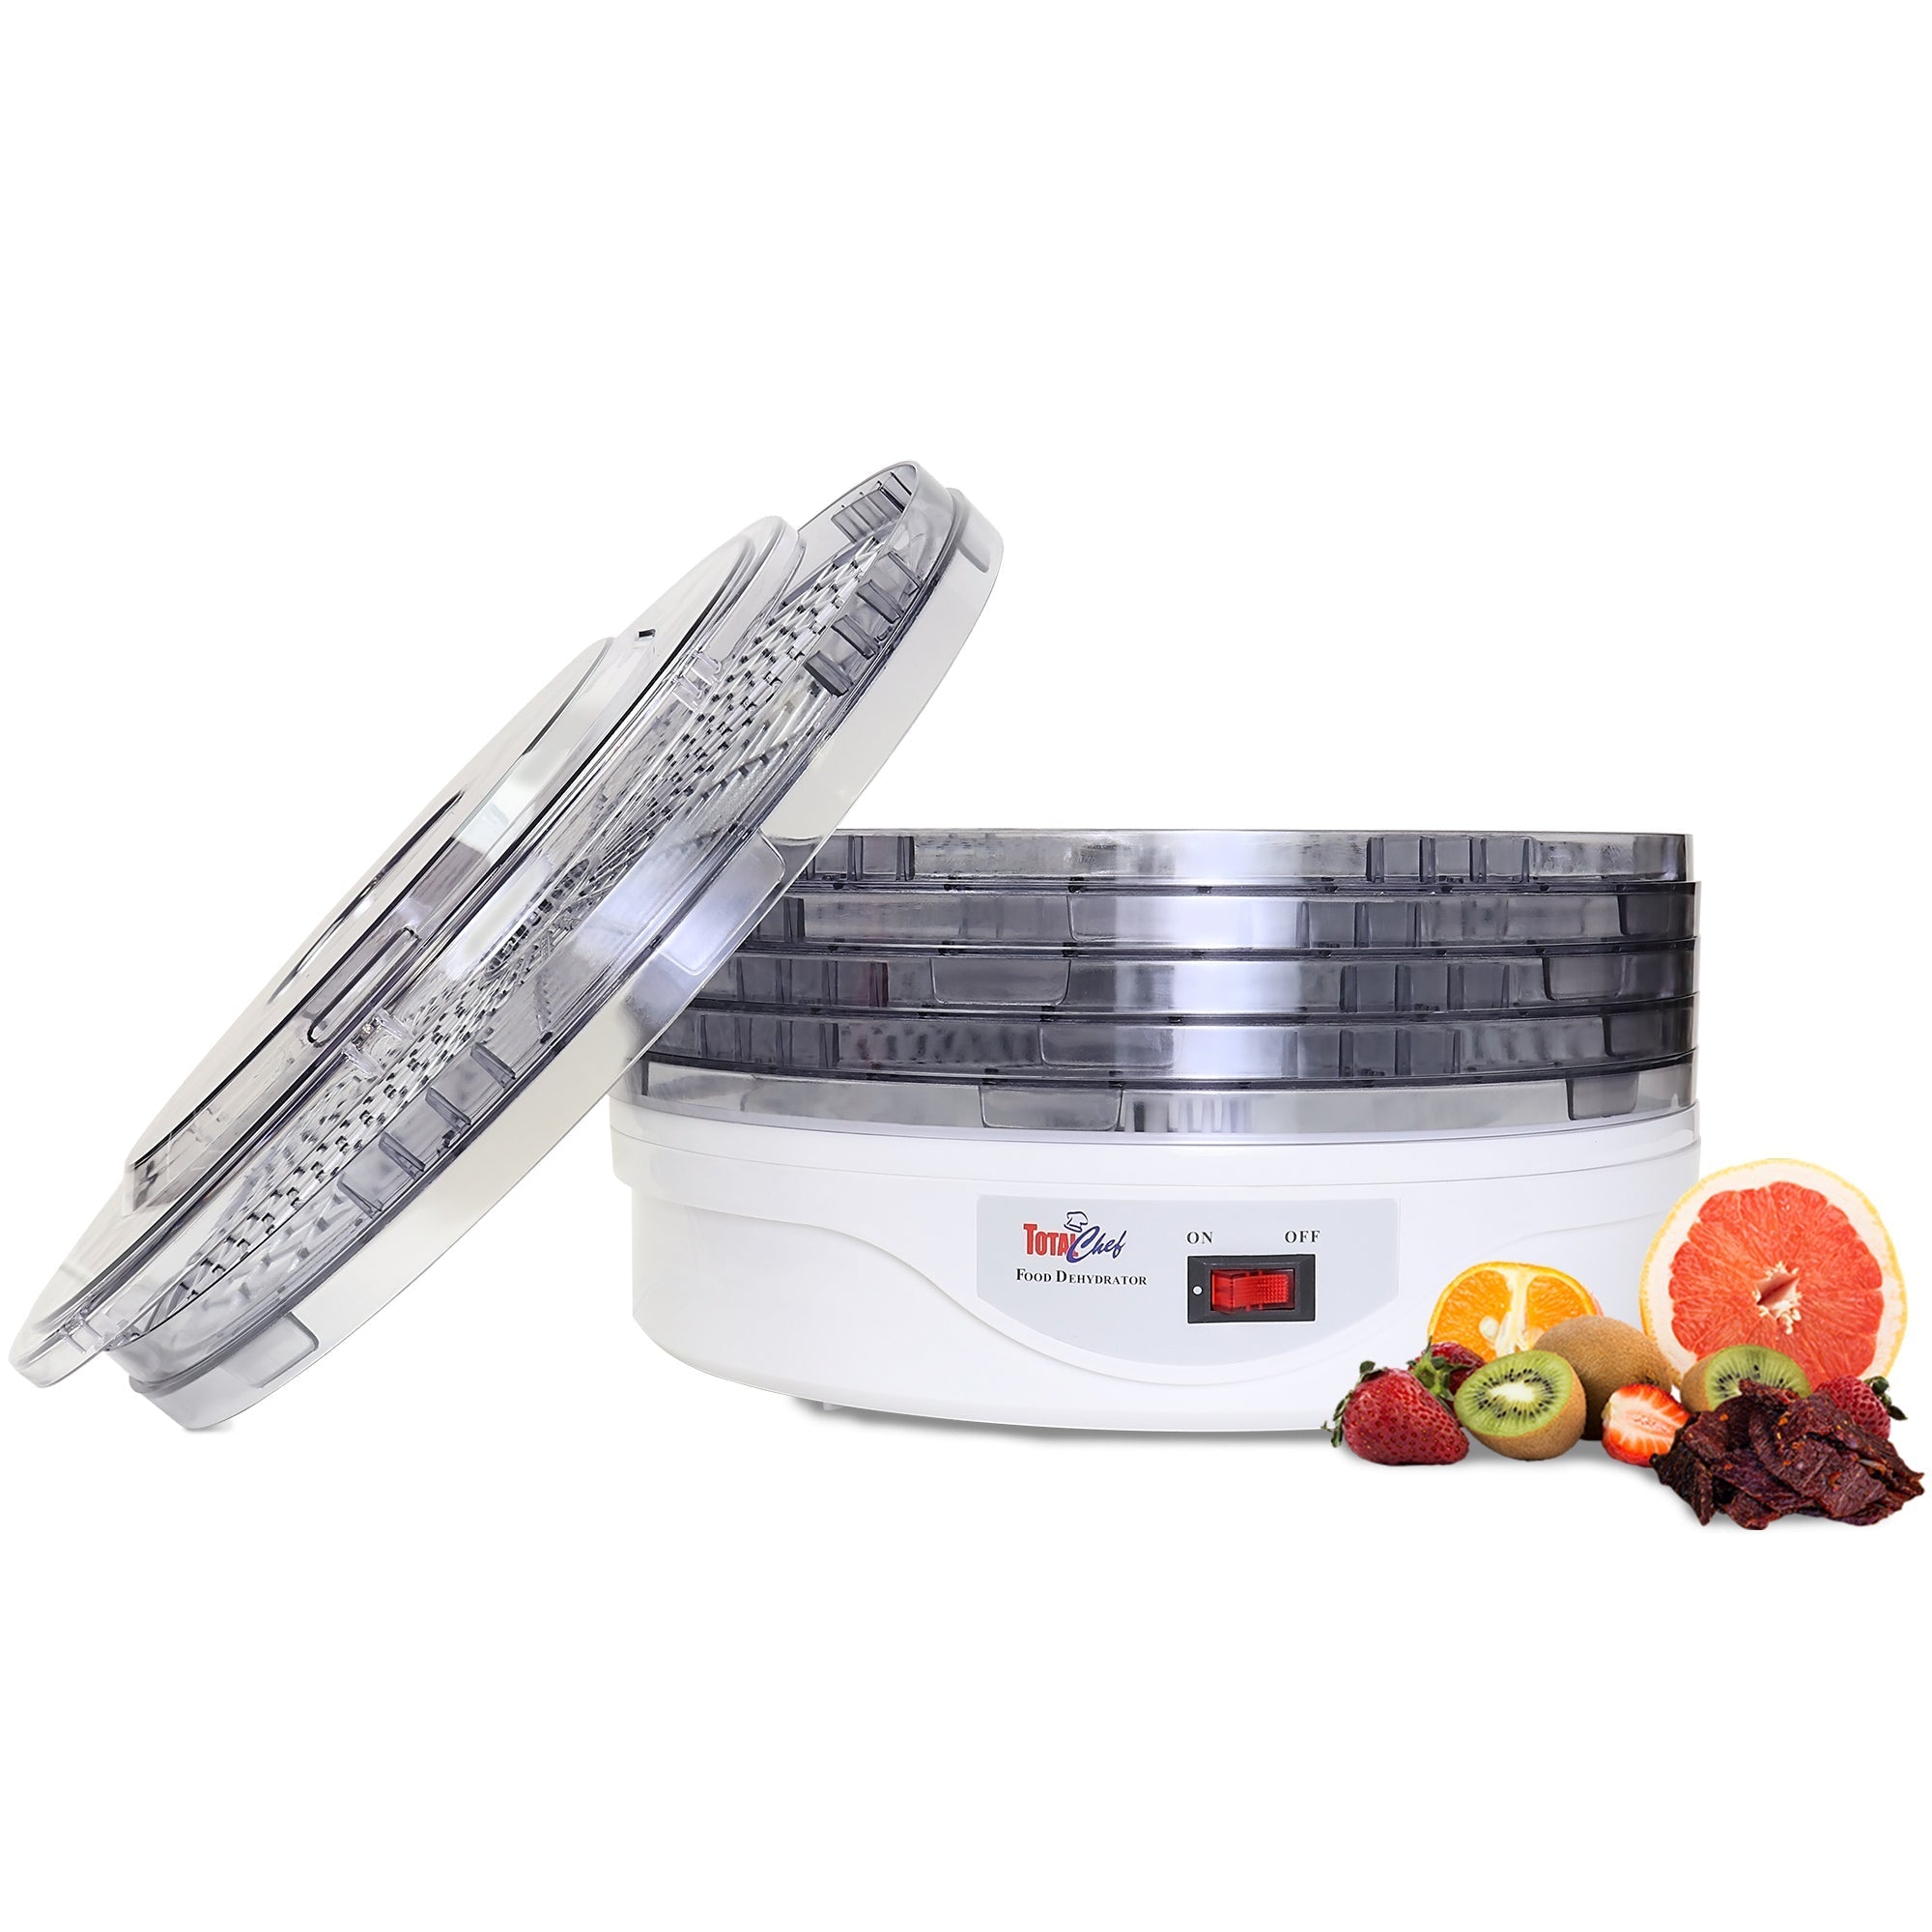 Elite Gourmet 5 Stainless Steel Tray Food Dehydrator w/ Temp Controls